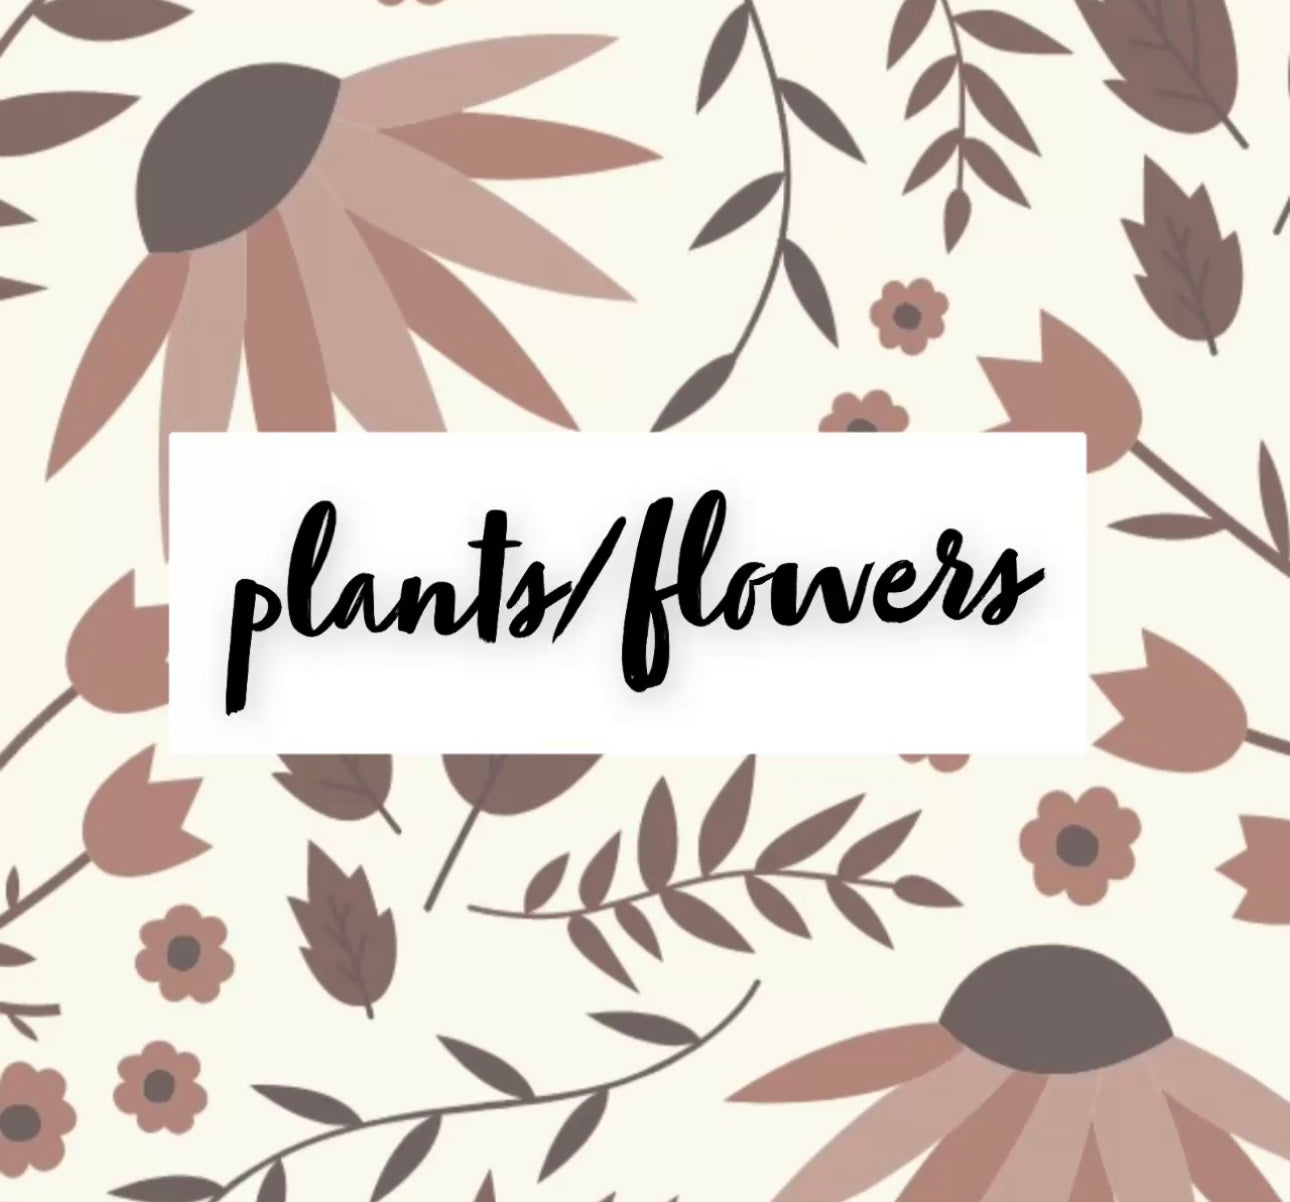 FLOWERS / PLANTS